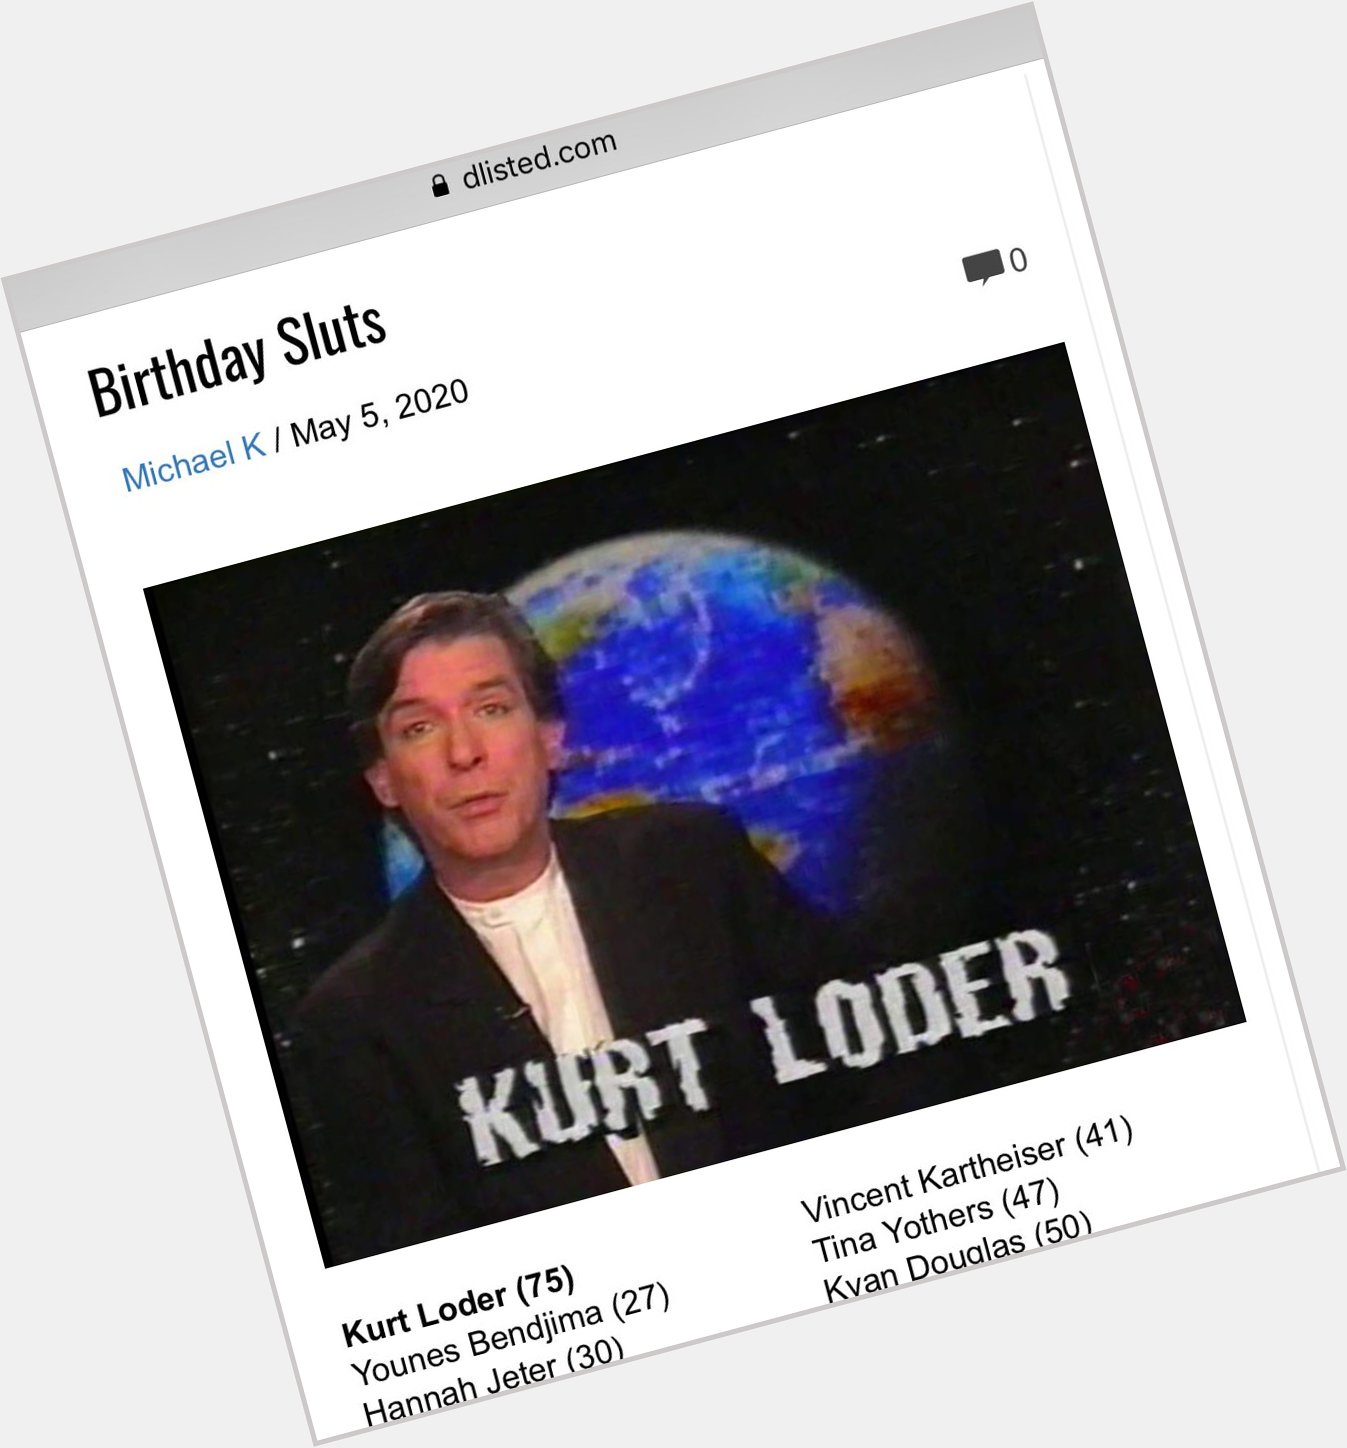 Happy birthday Kurt Loder!!! The greatest! 